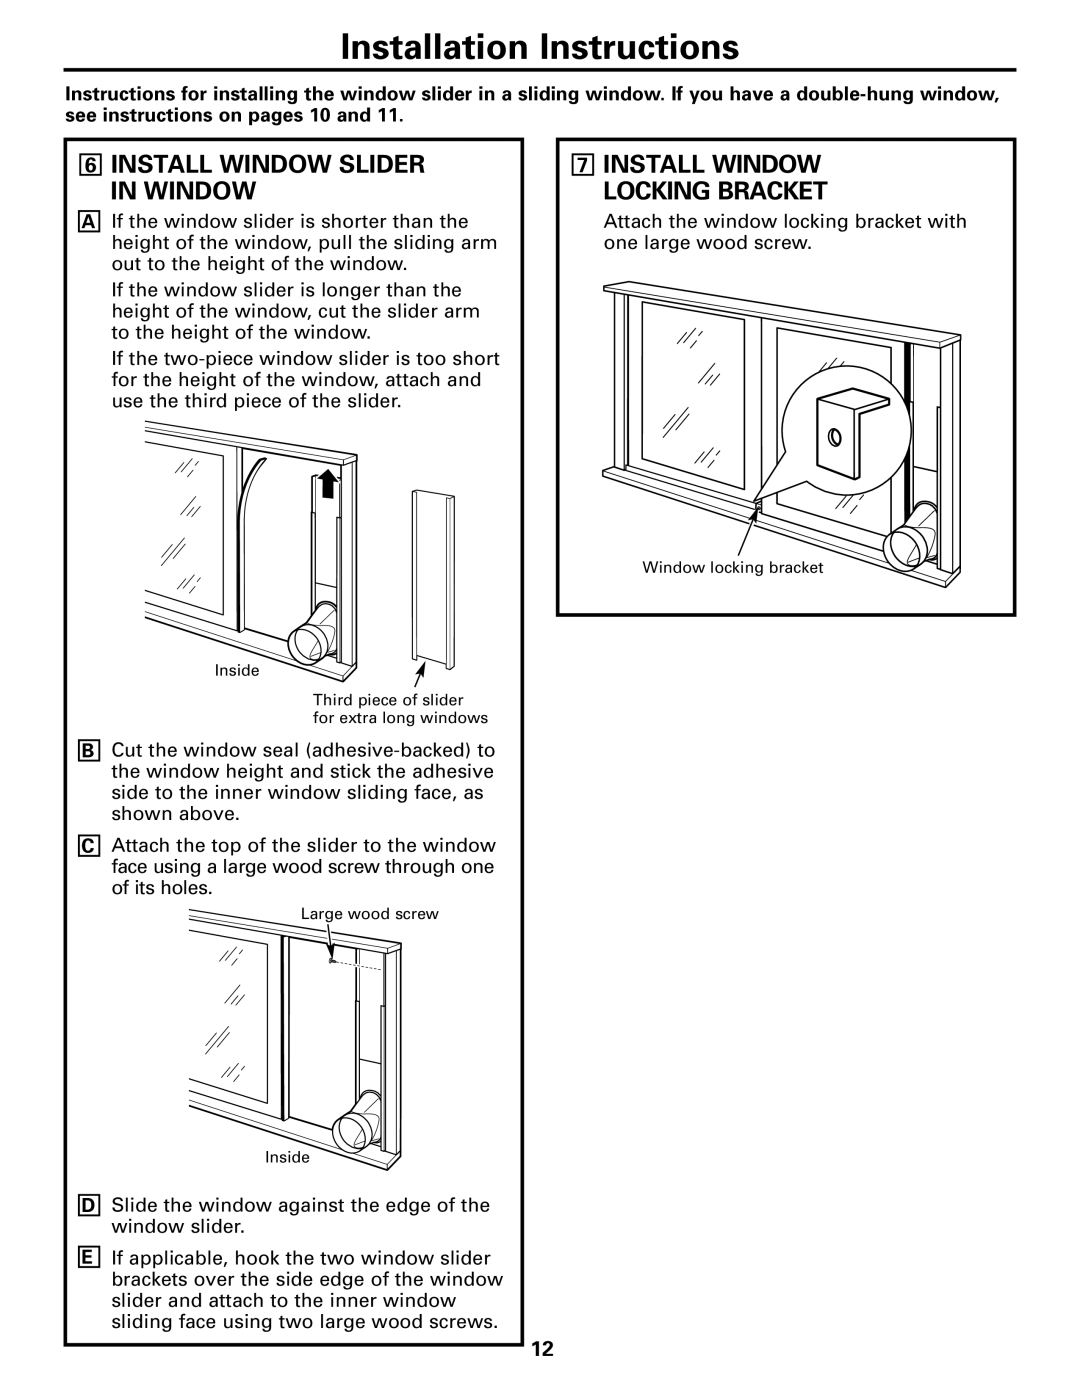 GE APE08 Installation Instructions, 6INSTALL WINDOW SLIDER IN WINDOW, 7INSTALL WINDOW LOCKING BRACKET, Inside 